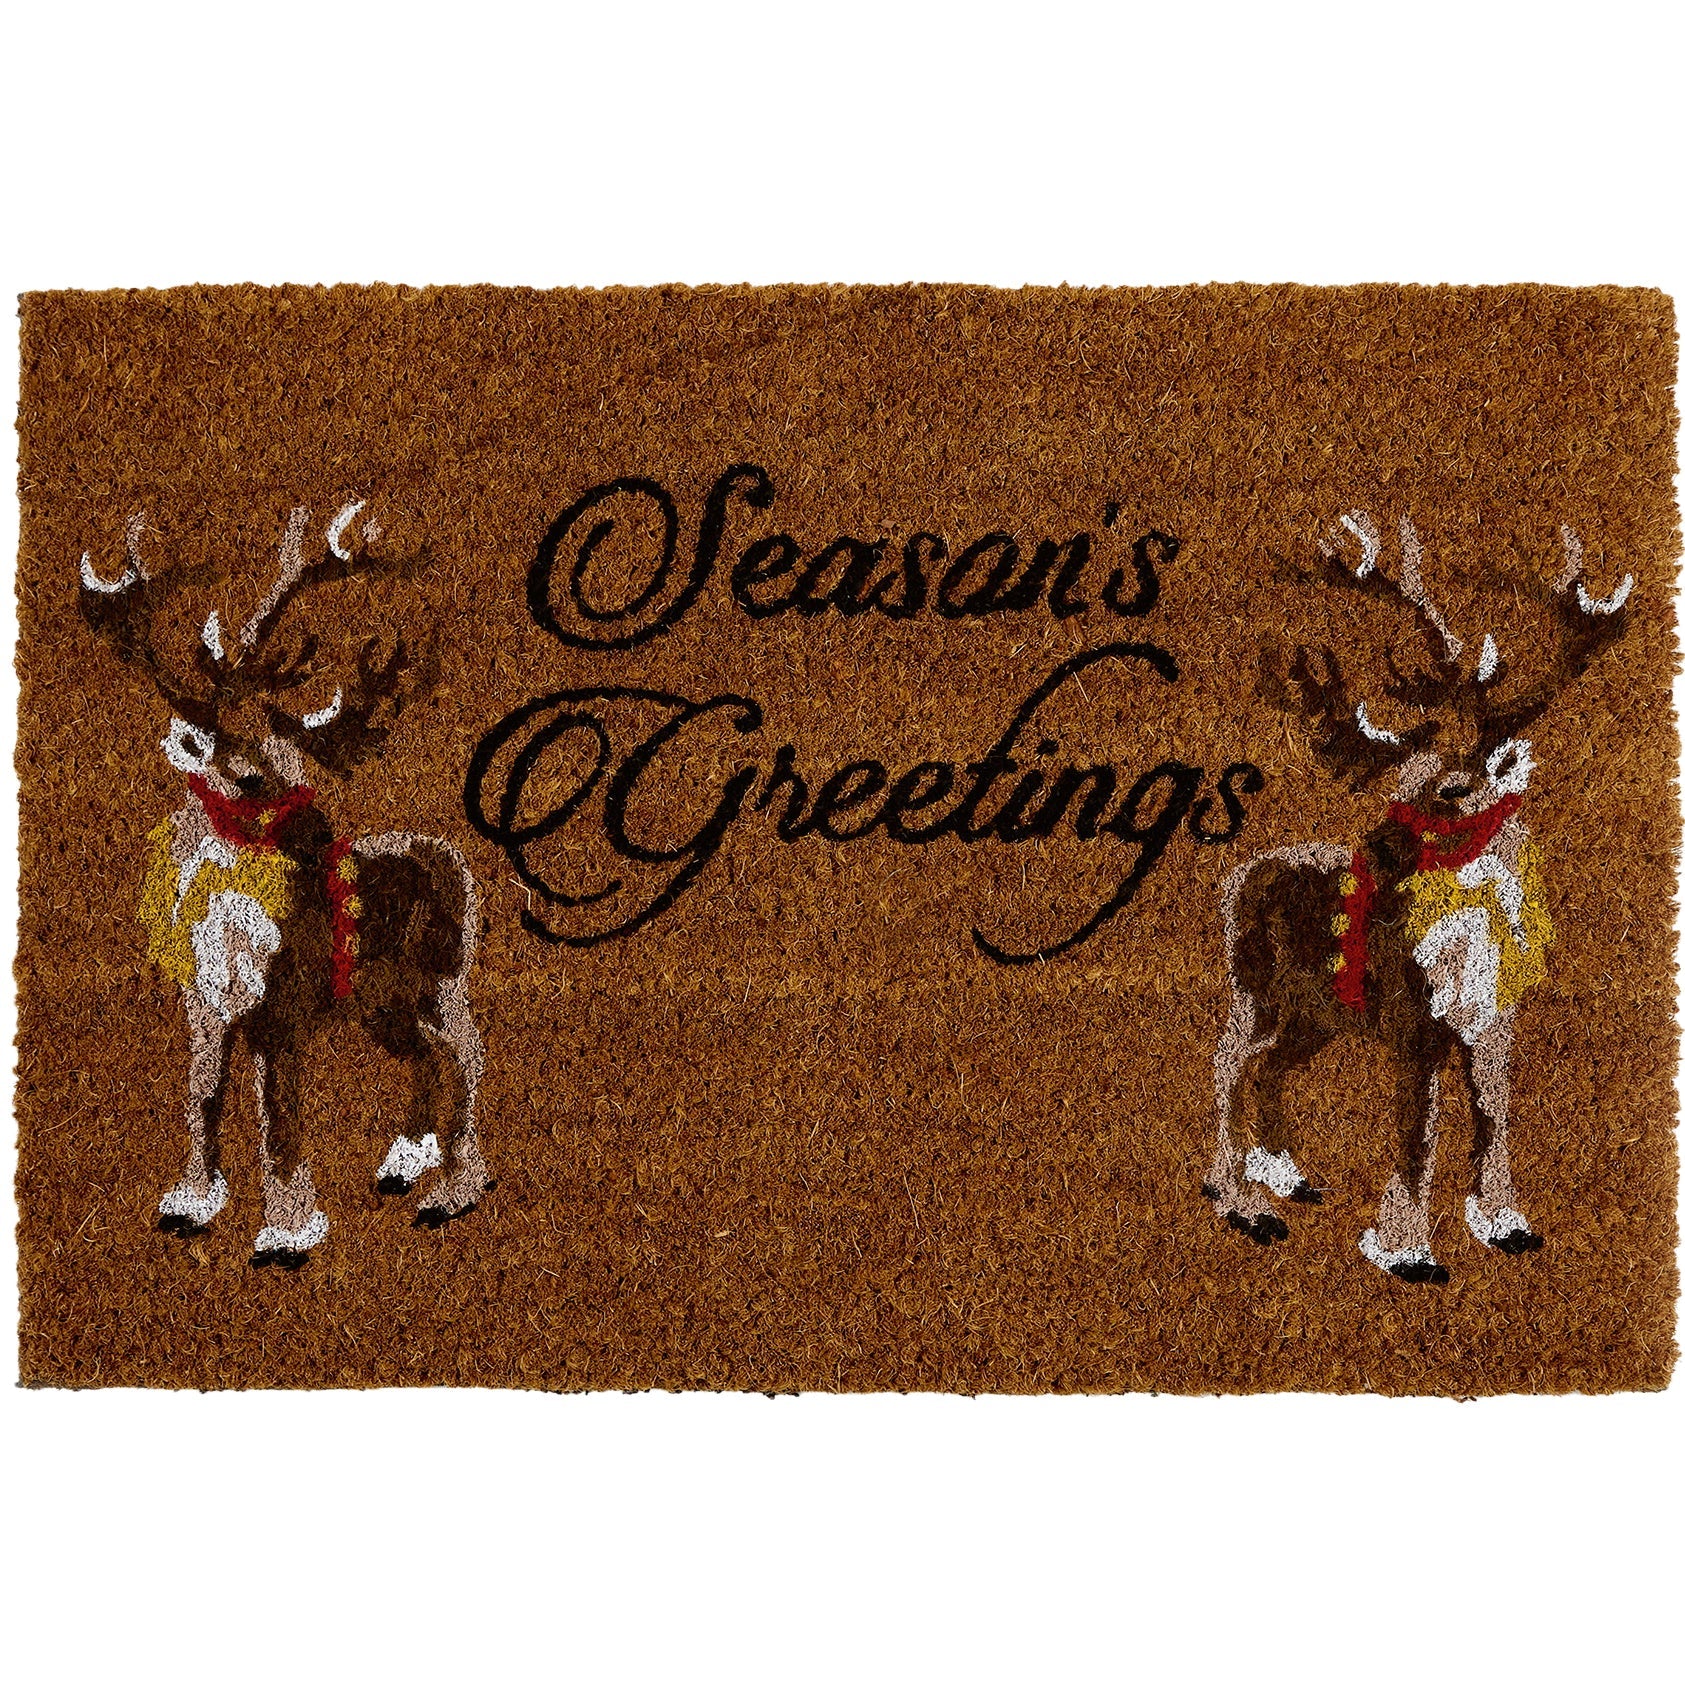 Accents AC211245 Coir Door Mat 40x60cm Reindeers Christmas - Various Designs - Premium Doormats from Premier Decorations - Just $9.95! Shop now at W Hurst & Son (IW) Ltd